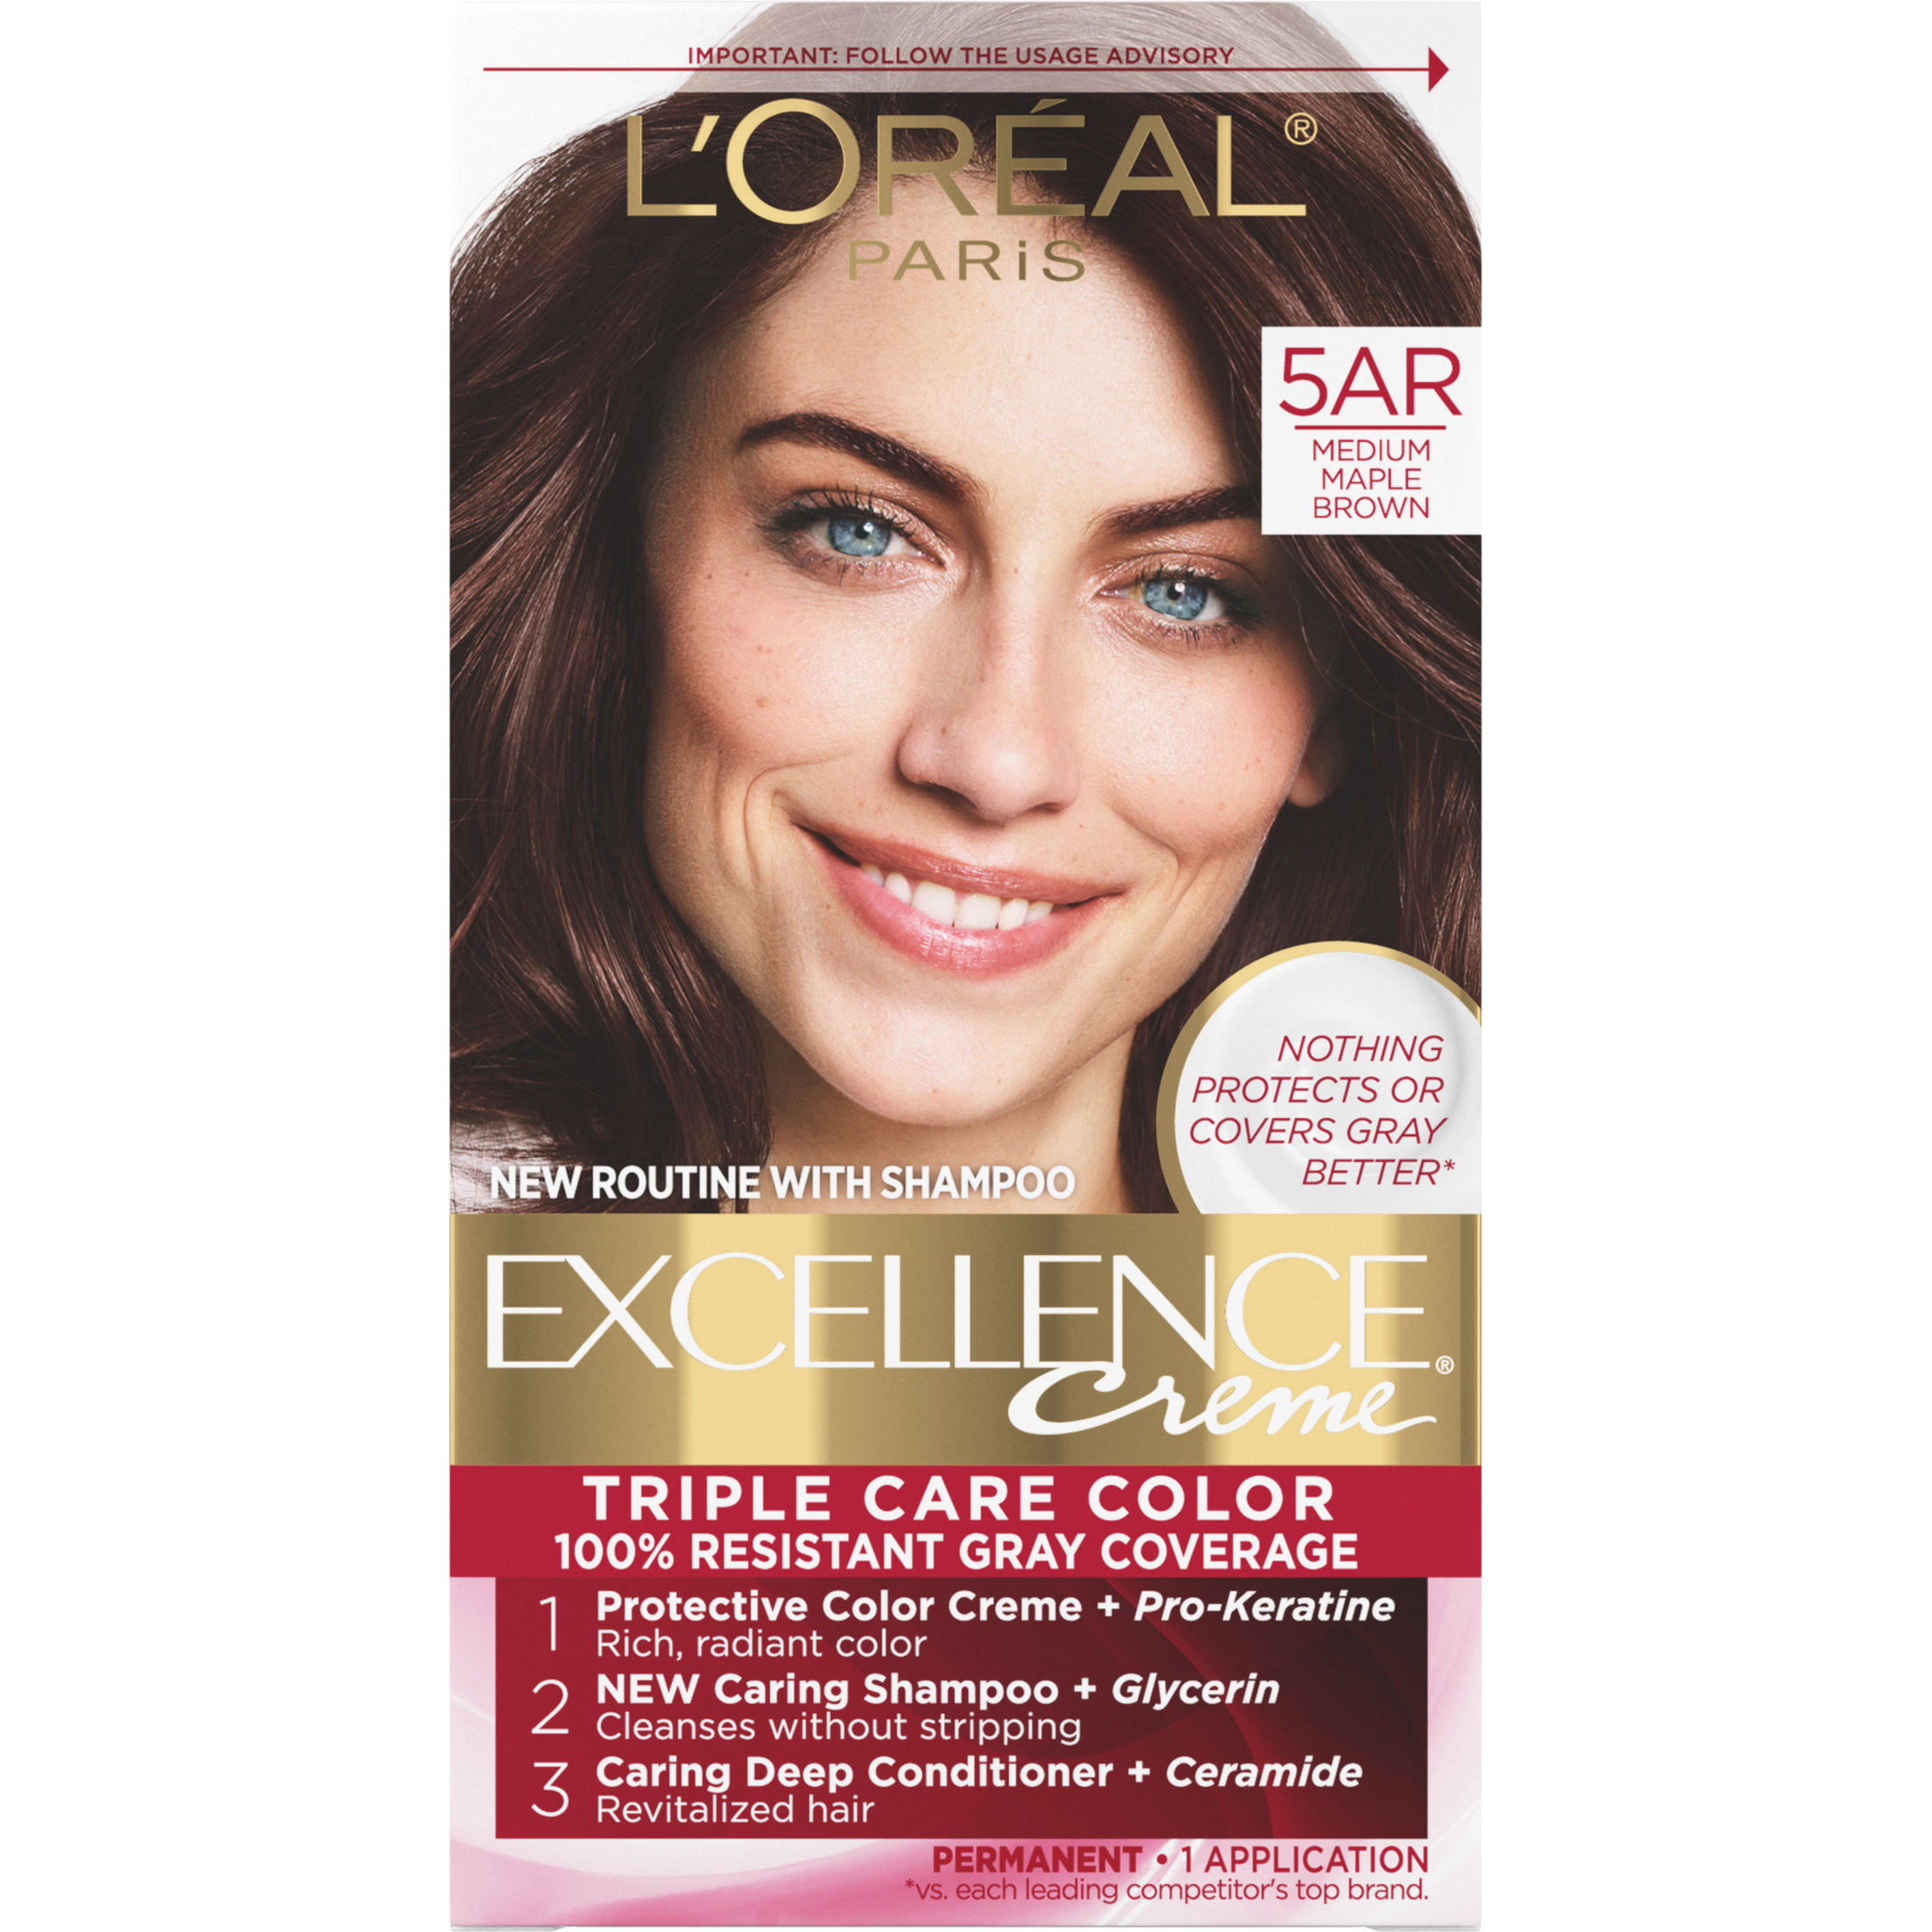 L'Oreal Paris Excellence Creme Permanent Hair Color, 5AR Medium Maple Brown - image 1 of 8